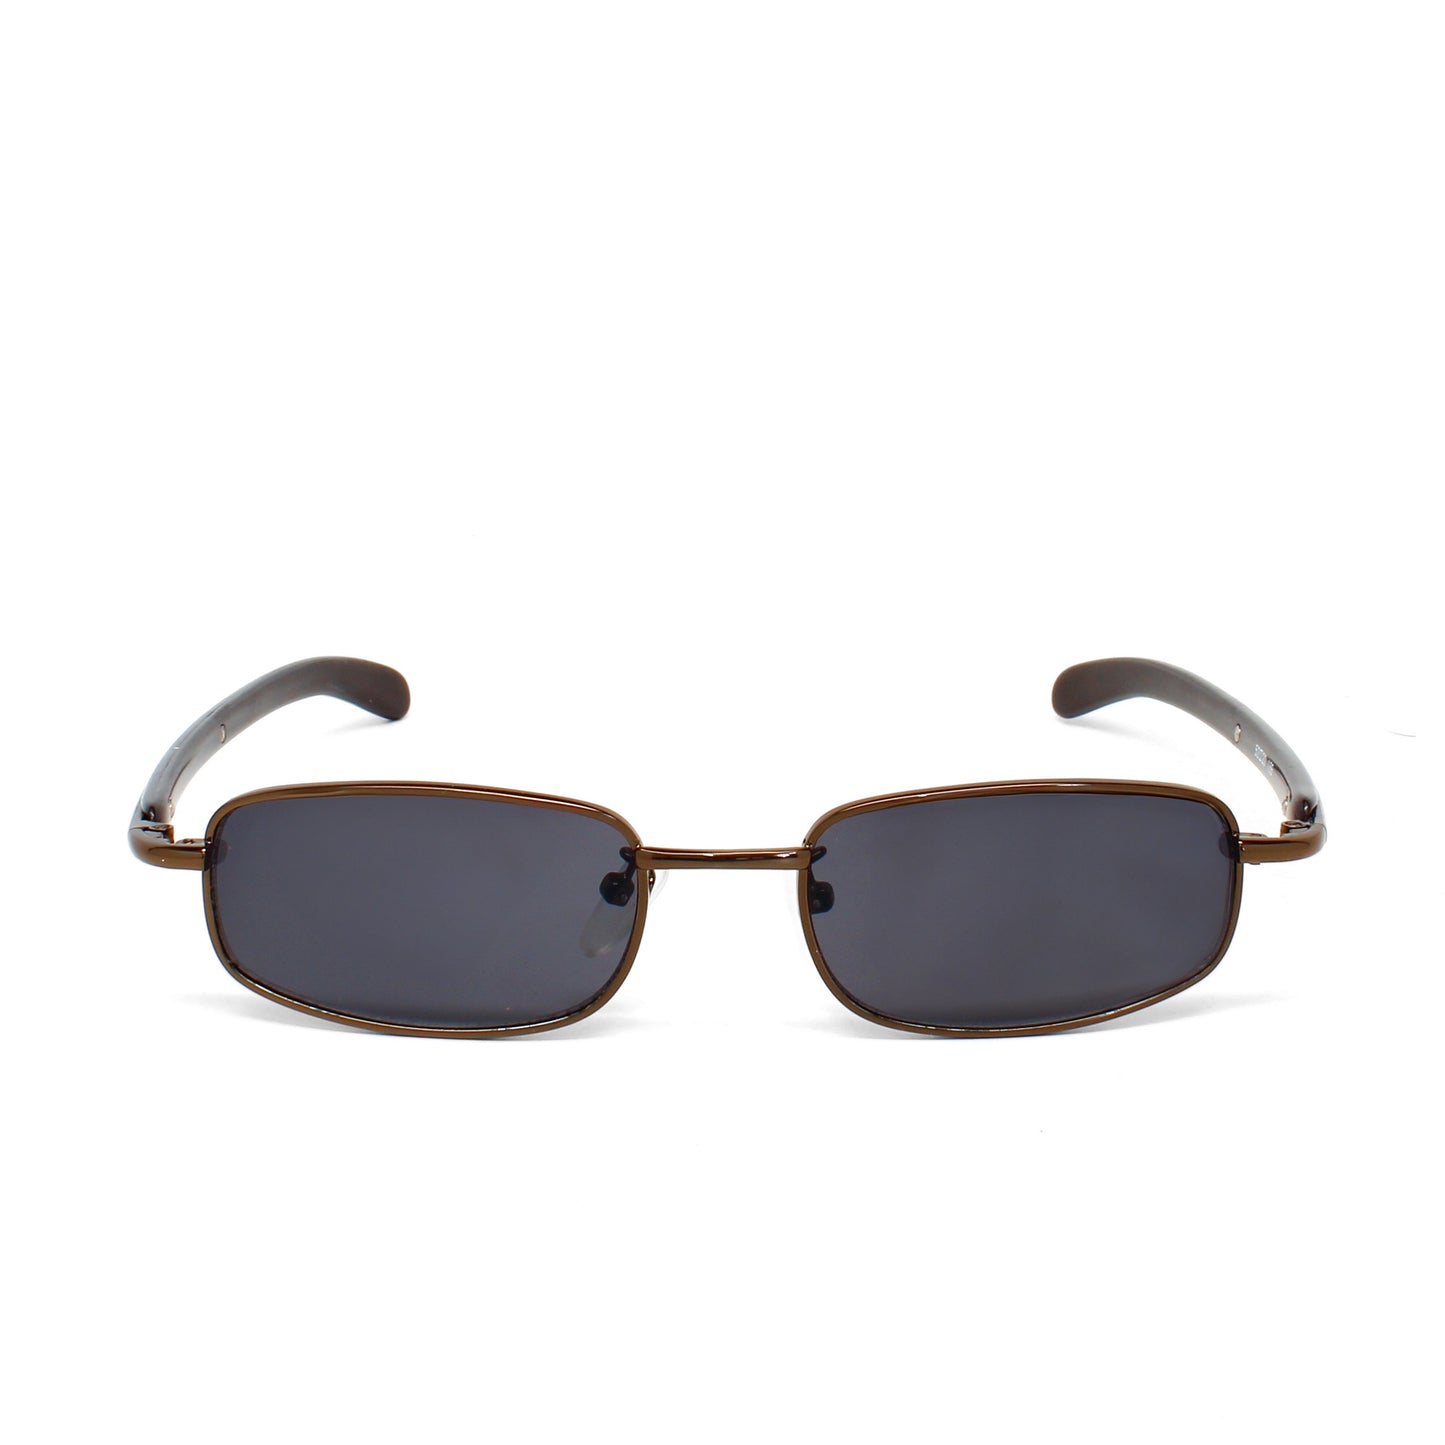 //Style M27// Vintage Small Size 1996 Wraparound Rectangle Roxbury Sunglasses - Bronze